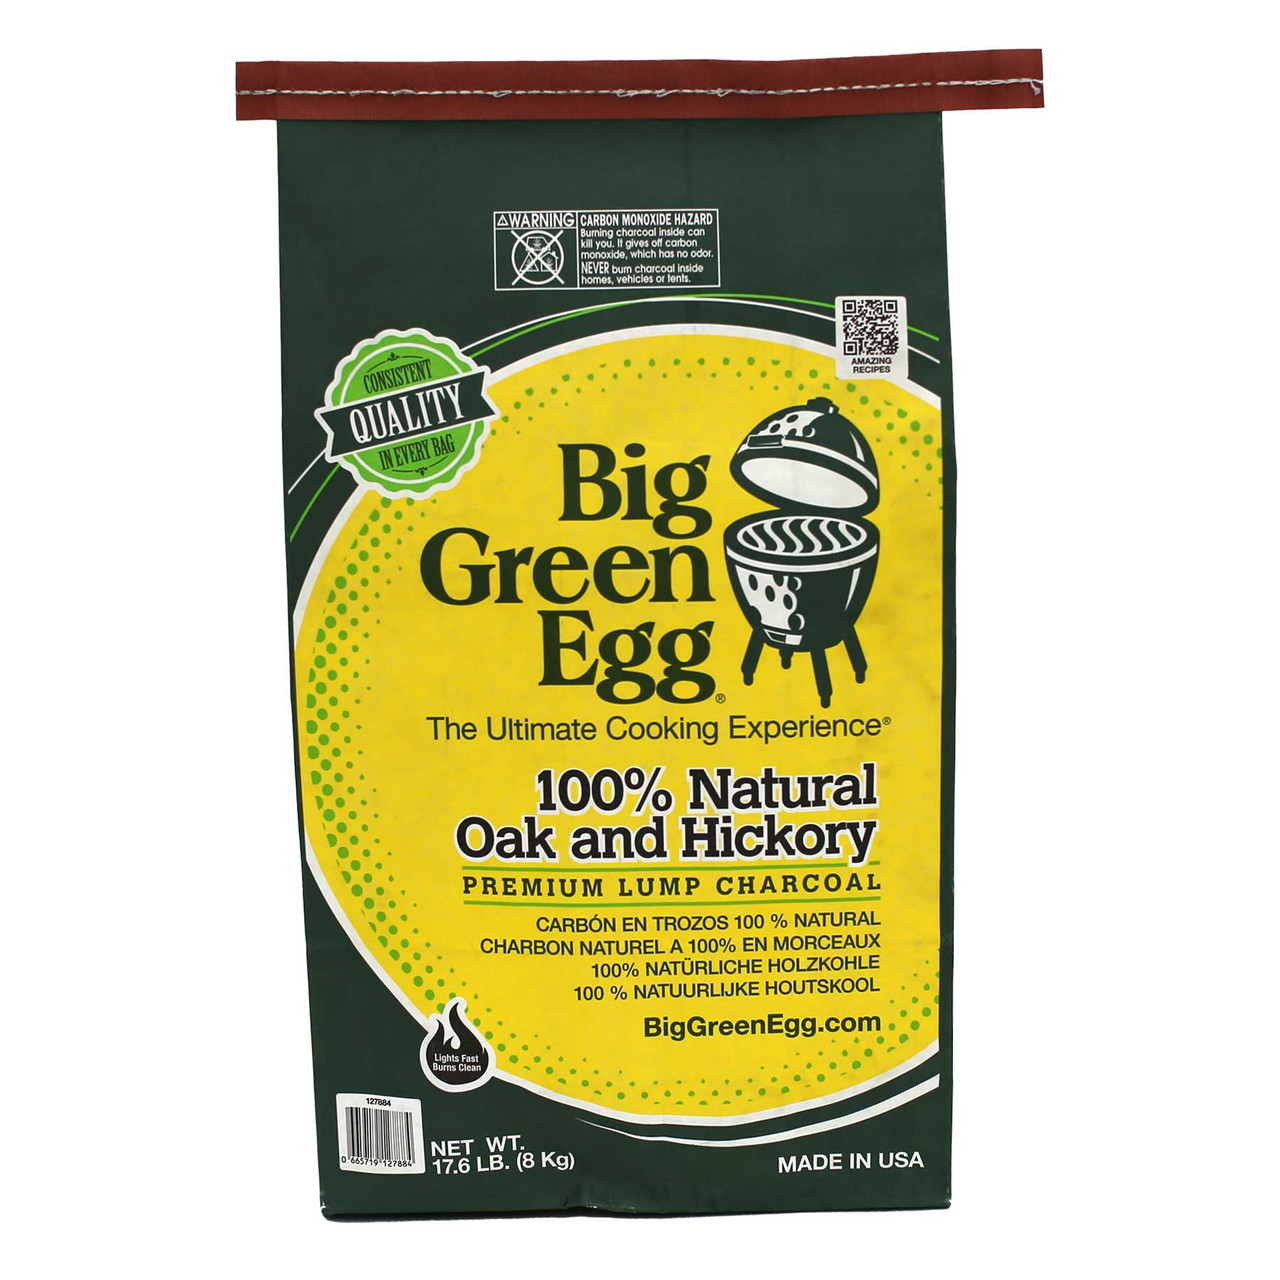 Indiener Bij wet Botanist 100% Natural Oak & Hickory Lump Charcoal - Big Green Egg